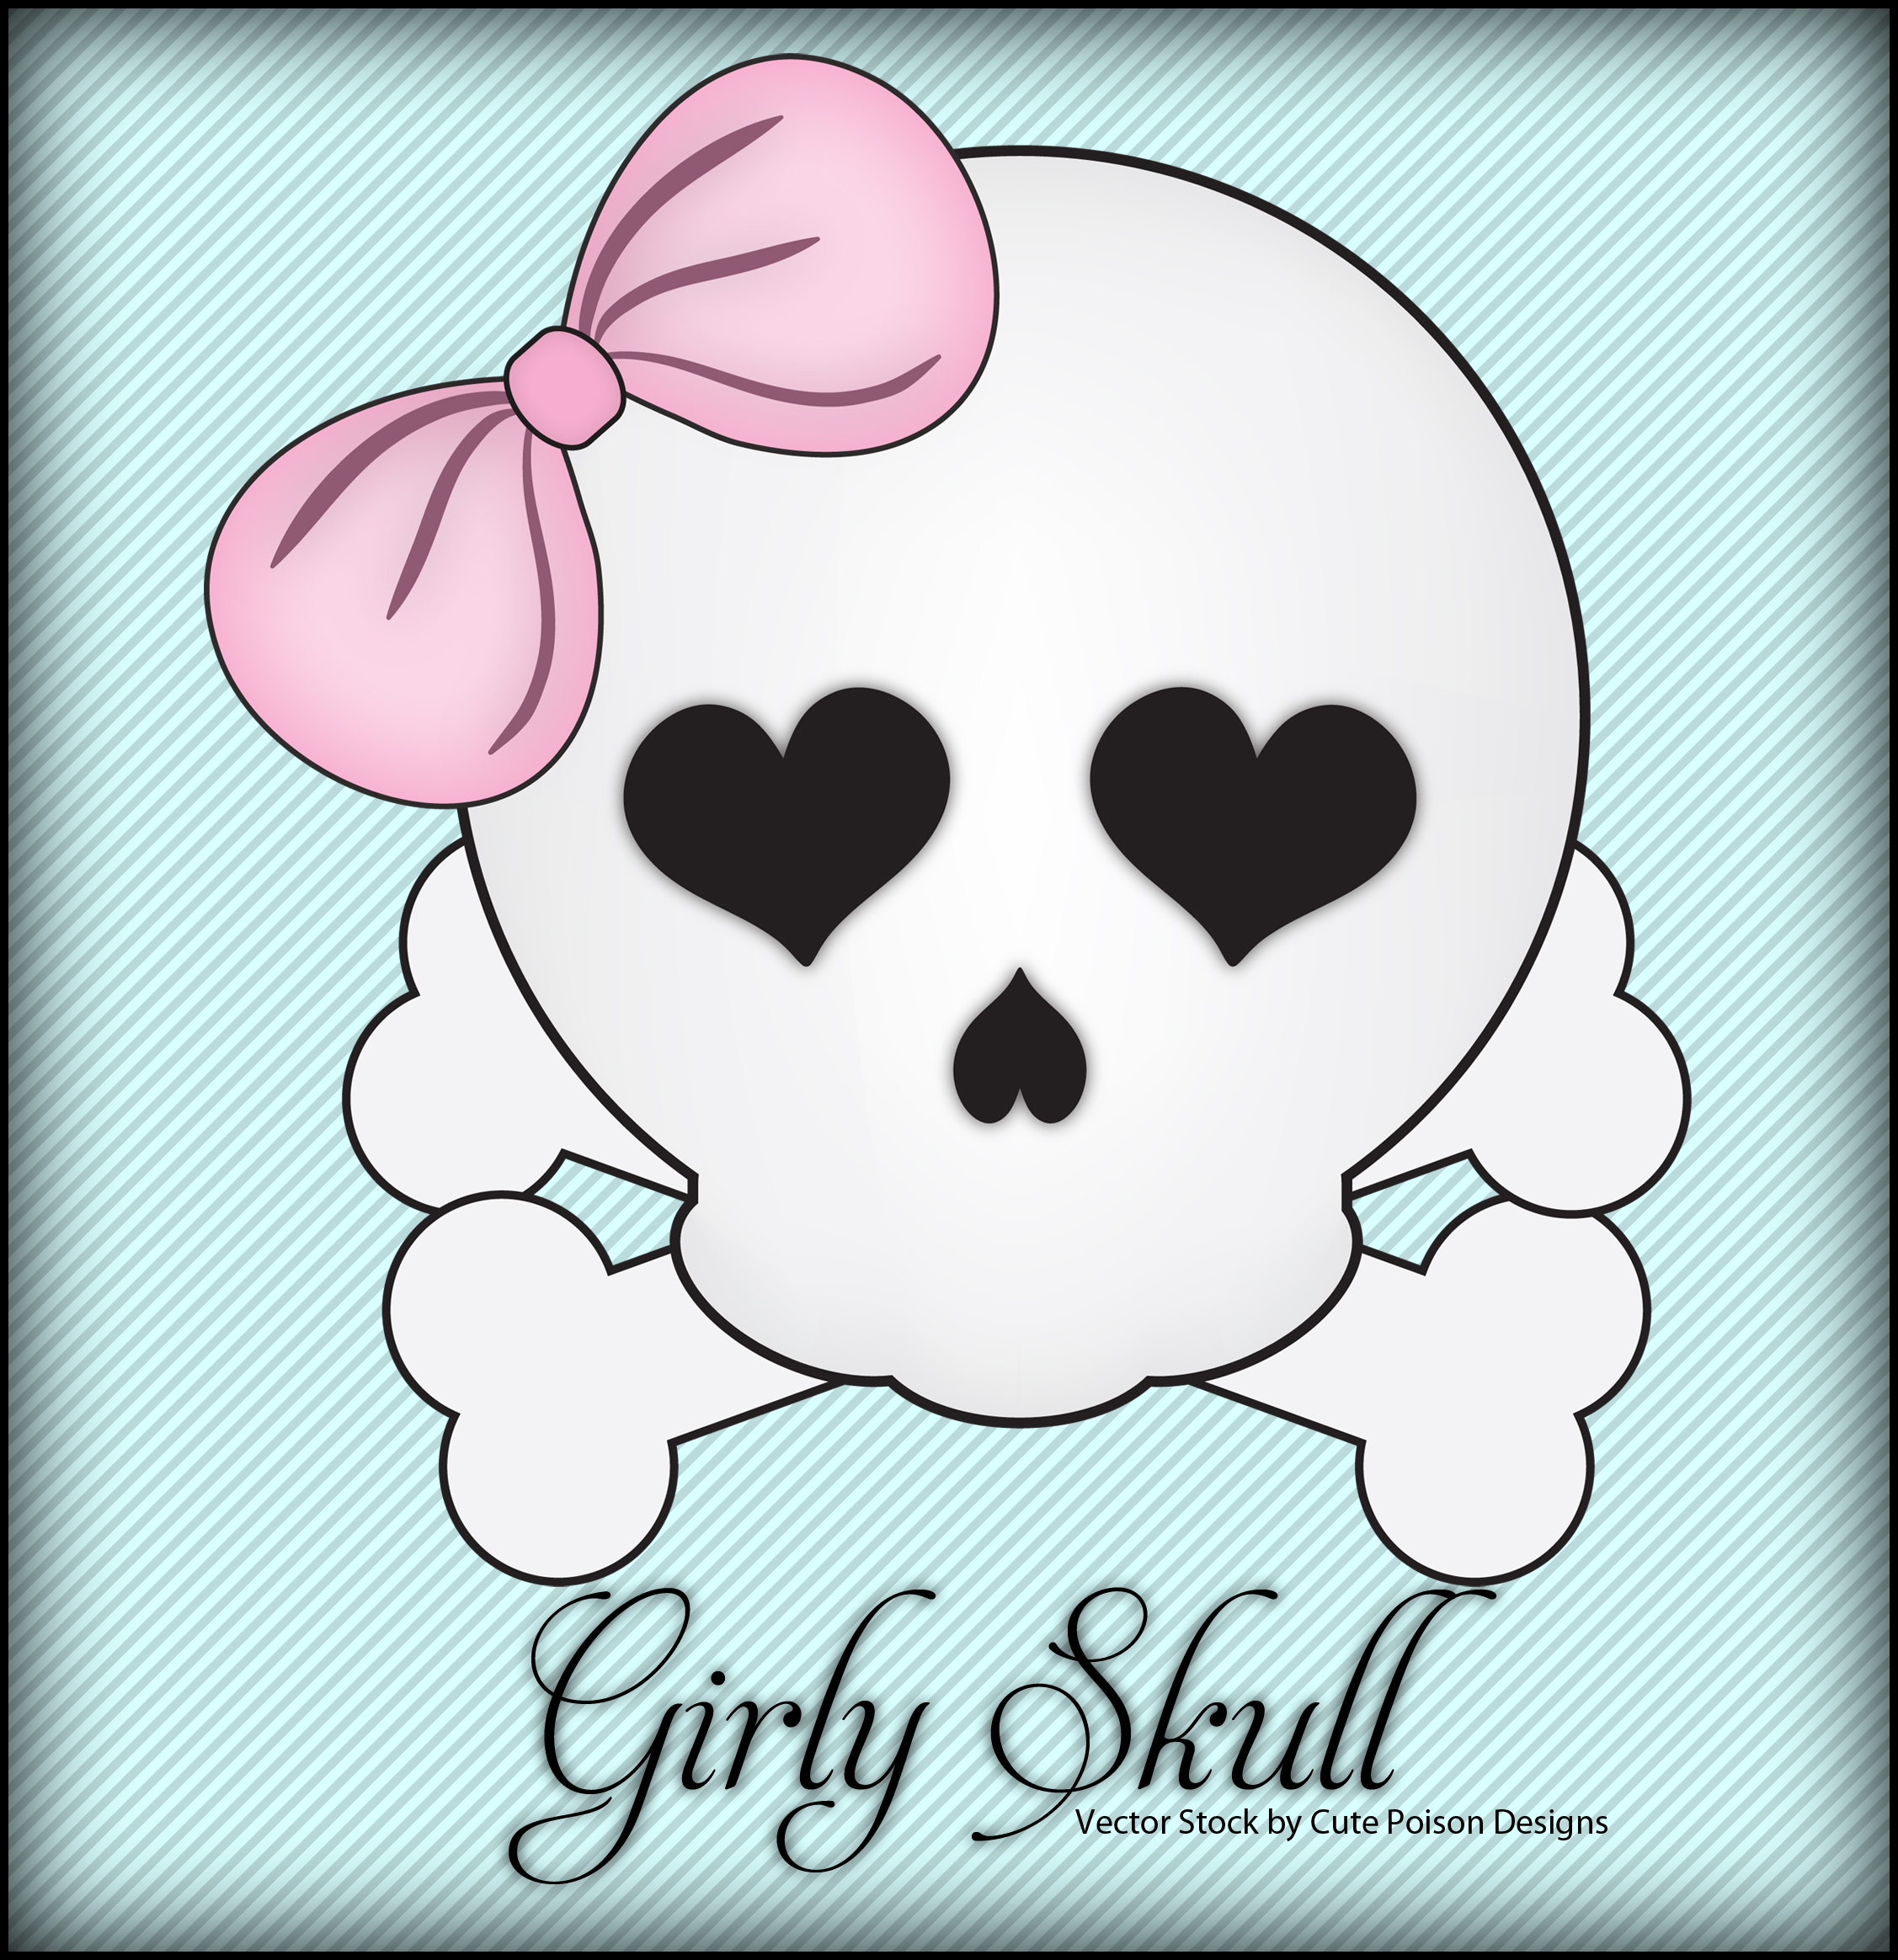 Cute Poison Designs Deviantart Art Vector Girly Skull